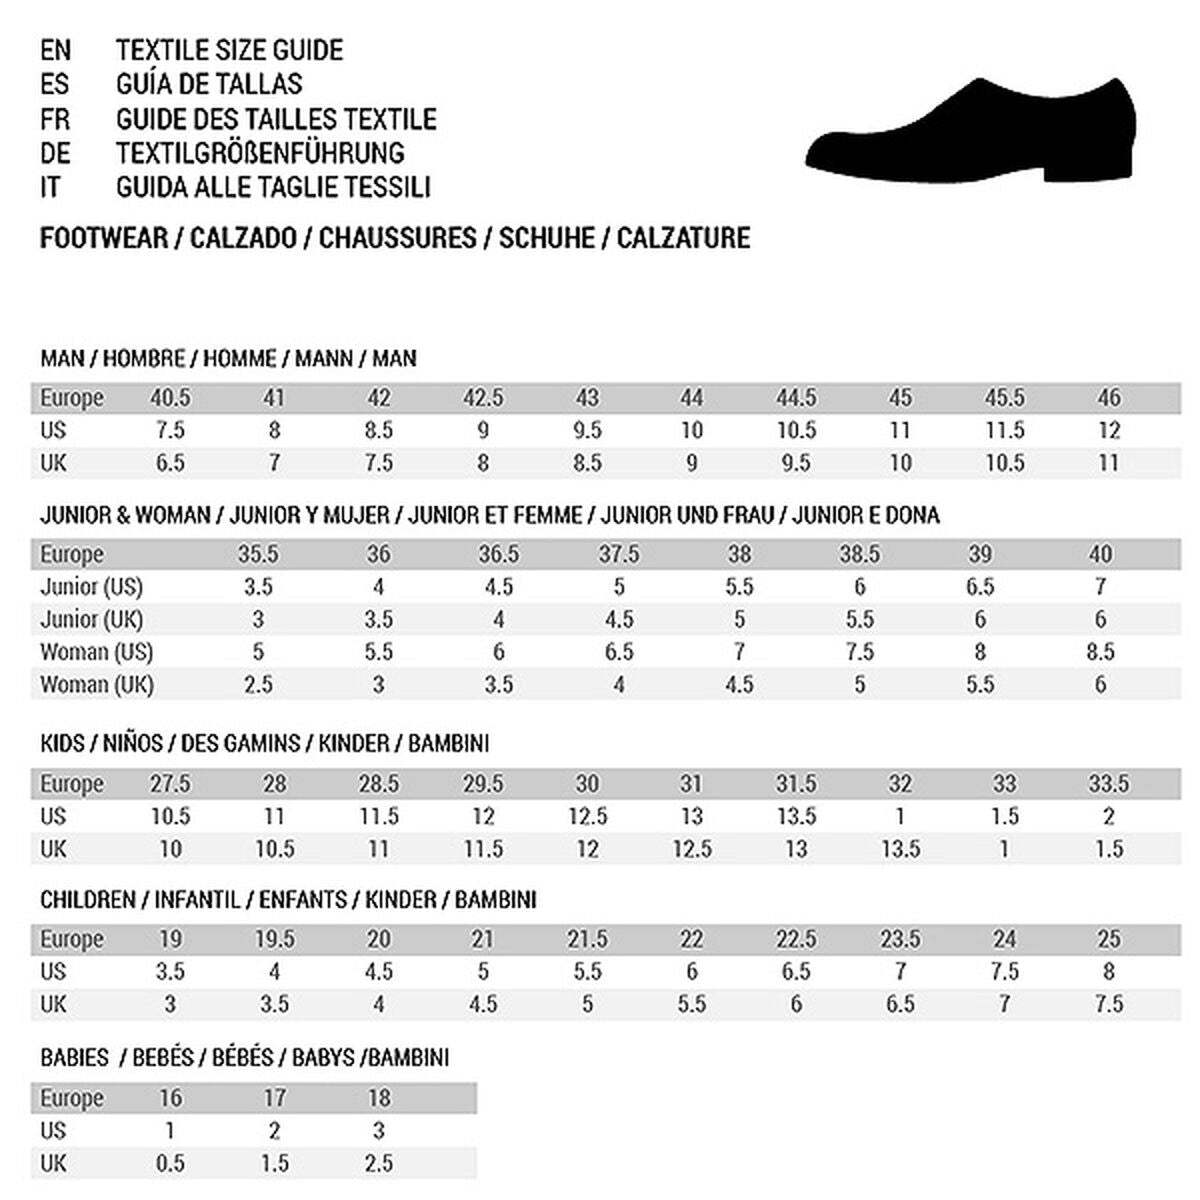 Chaussures de Sport pour Homme New Balance 574 Gris clair Blanc - New Balance - Jardin D'Eyden - jardindeyden.fr